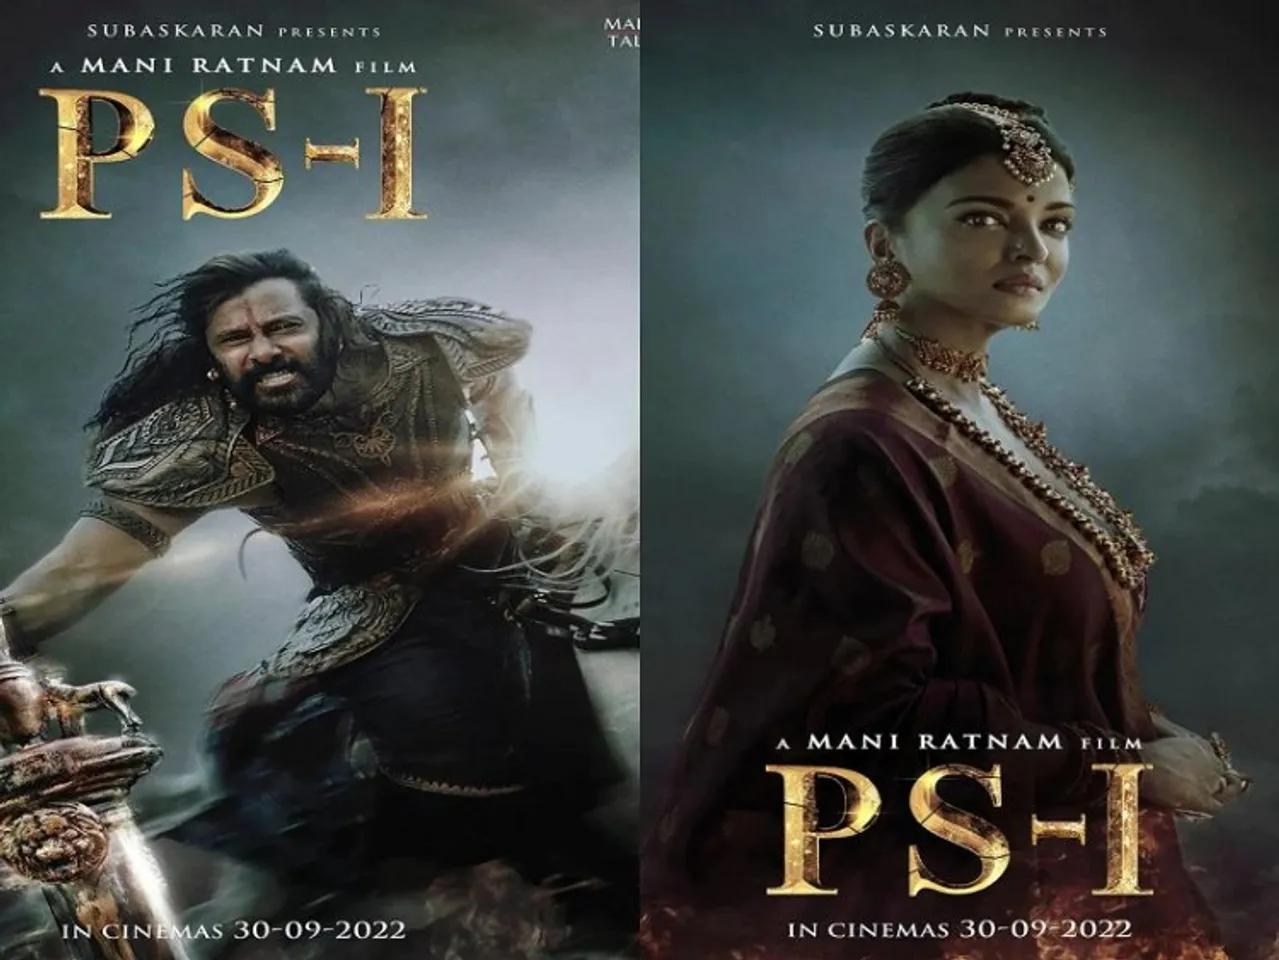 Upcoming movie "Ponniyin Selvan - 1" released new poster of Aishwarya Rai Bachchan.